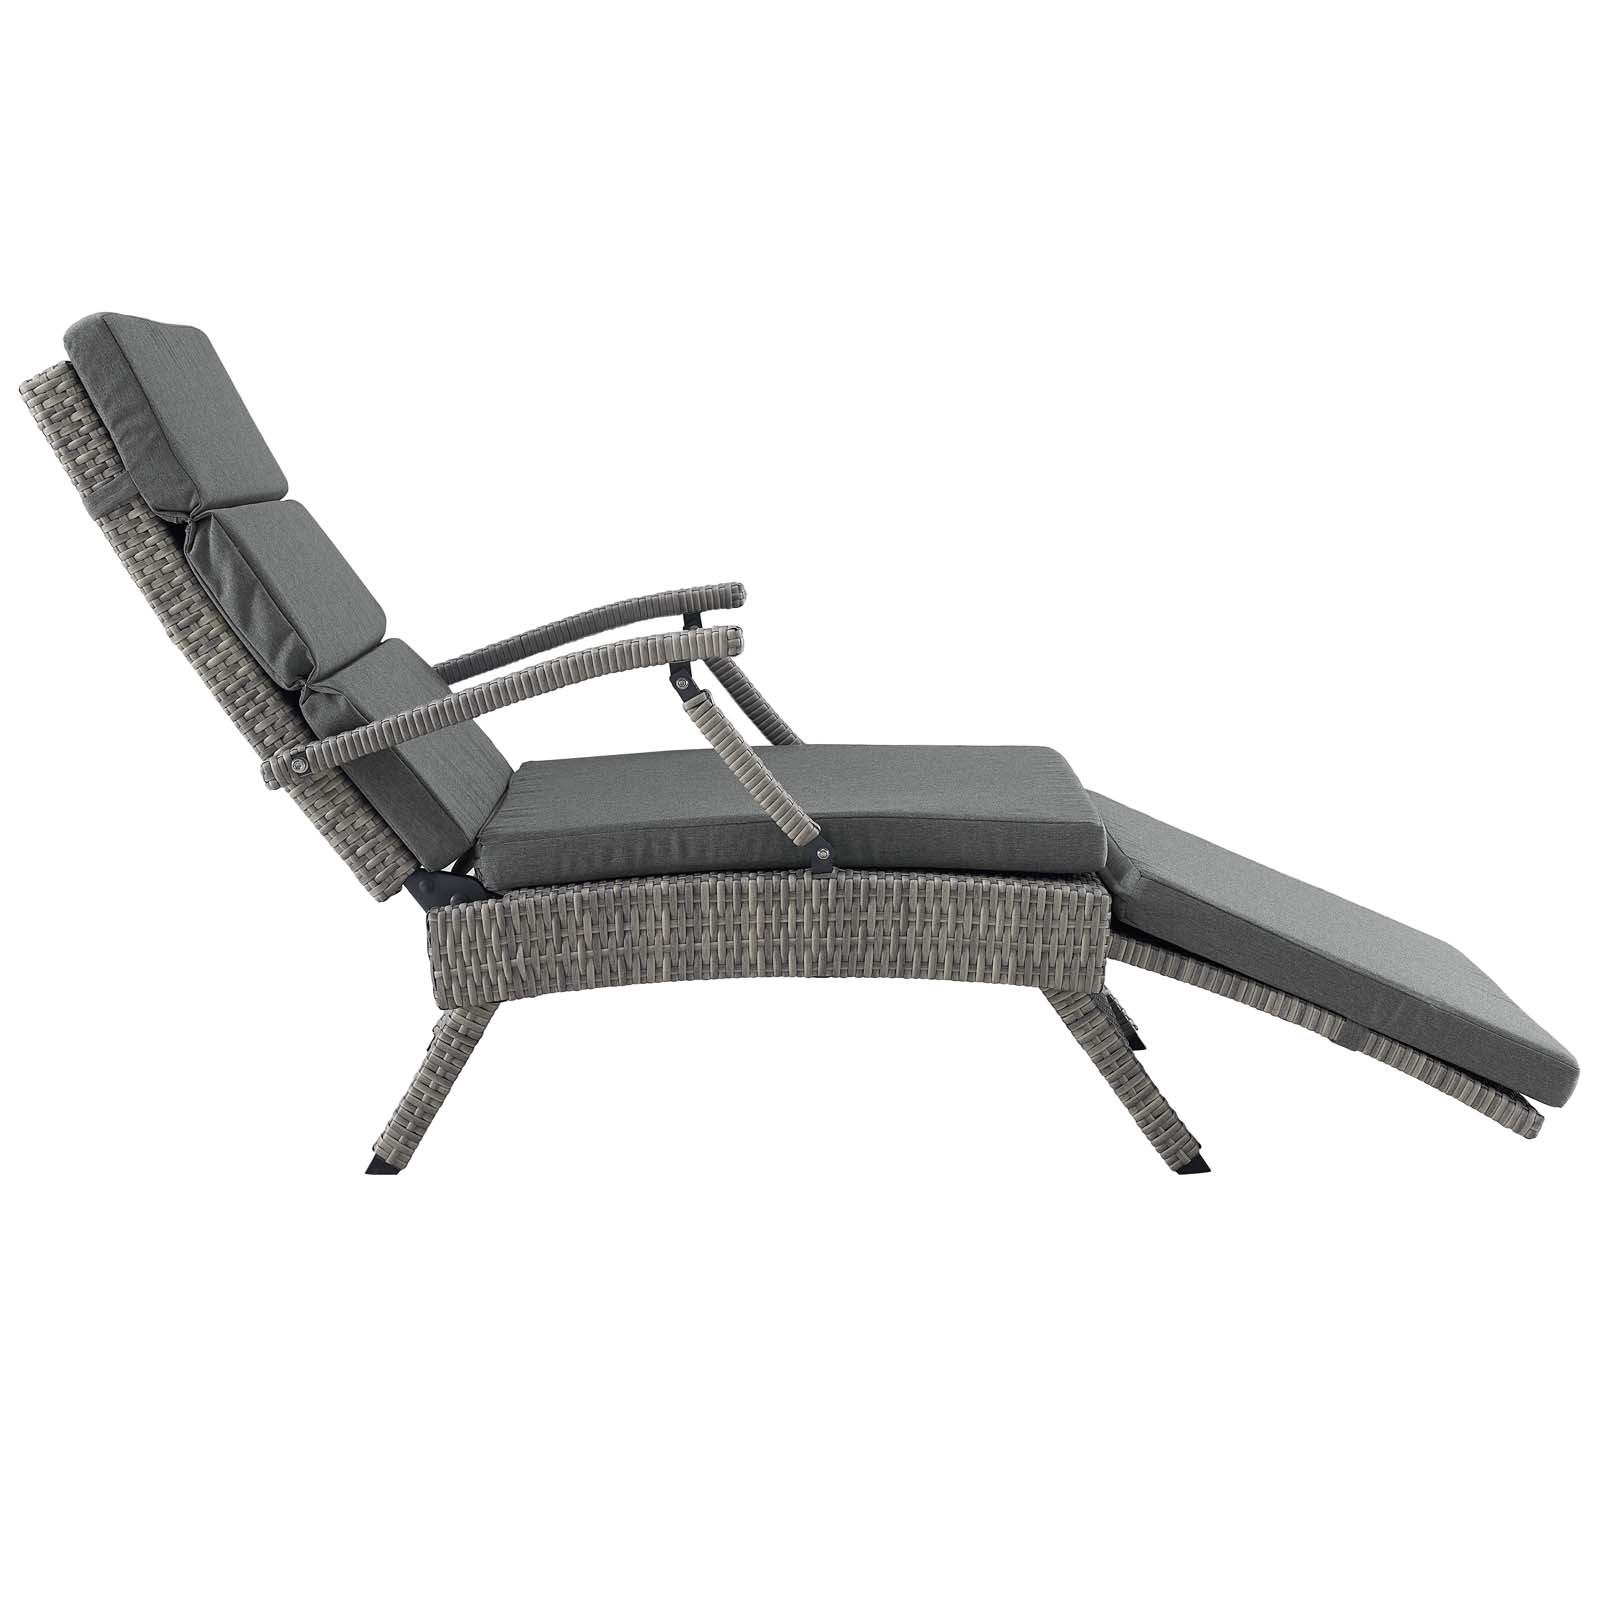 Modern Contemporary Urban Design Outdoor Patio Balcony Garden Furniture Lounge Chair Chaise, Rattan Wicker, Dark Grey Gray - image 3 of 8